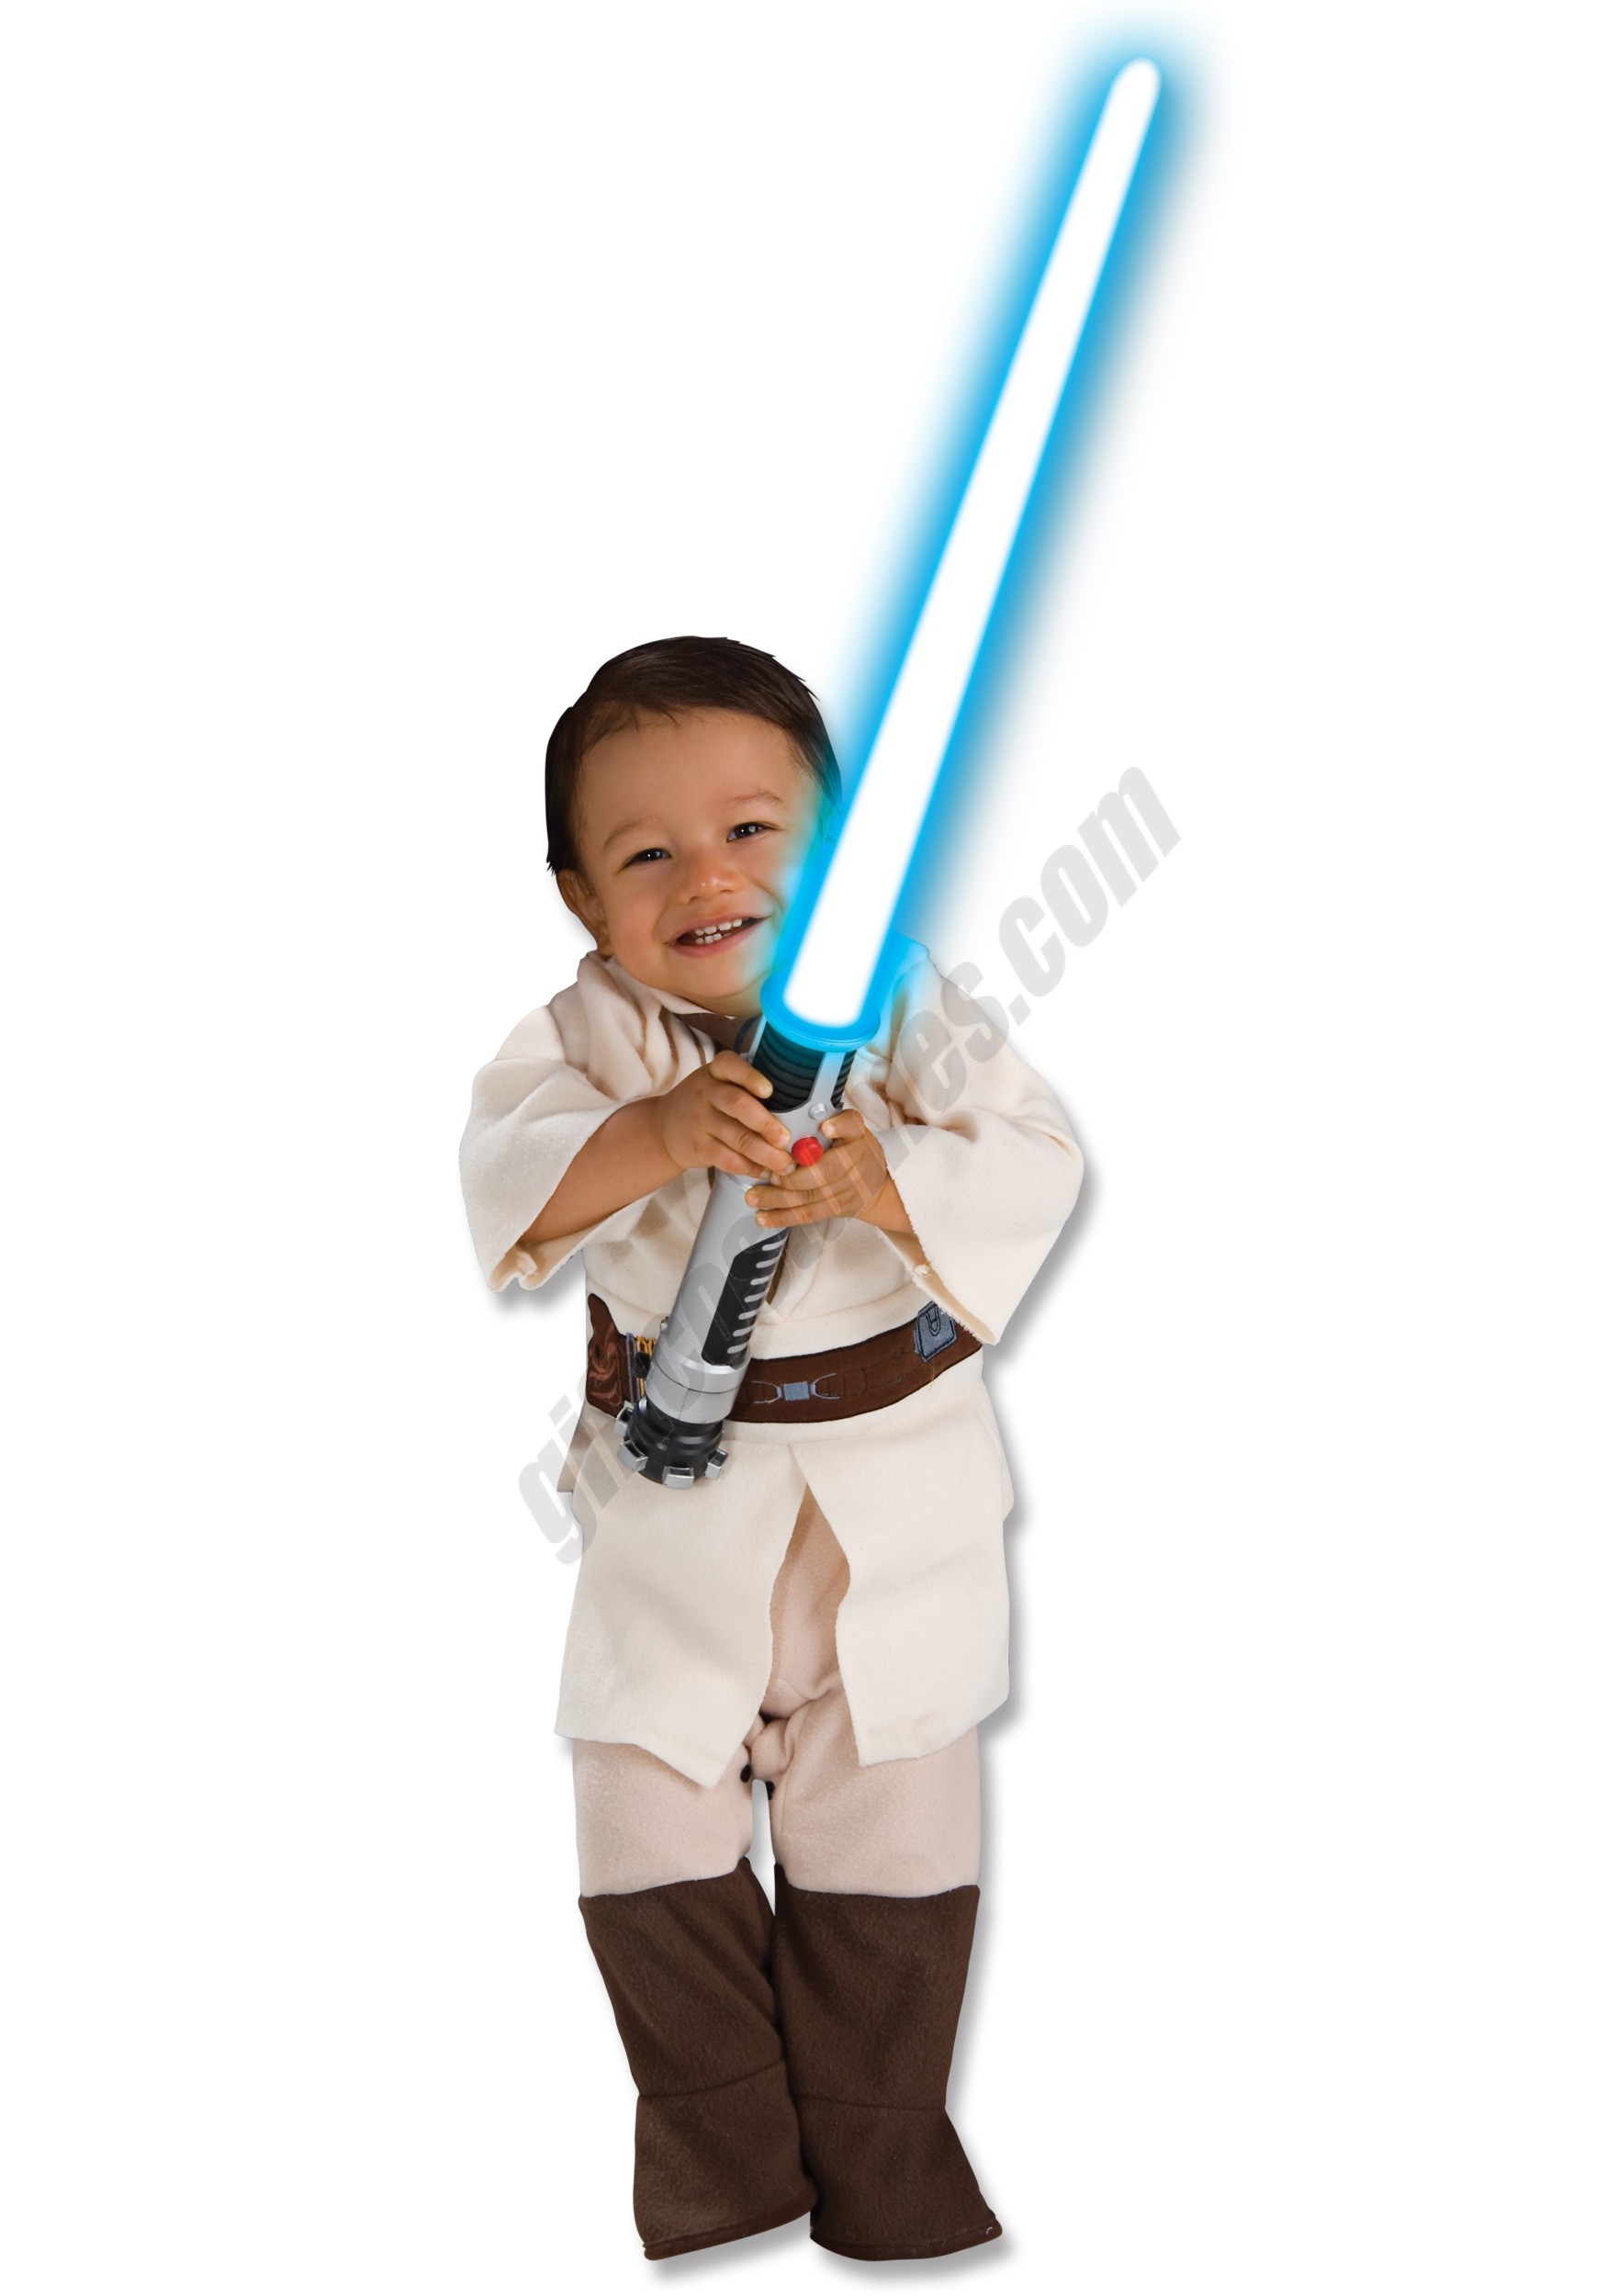 Obi Wan Kenobi Toddler Costume Promotions - Obi Wan Kenobi Toddler Costume Promotions